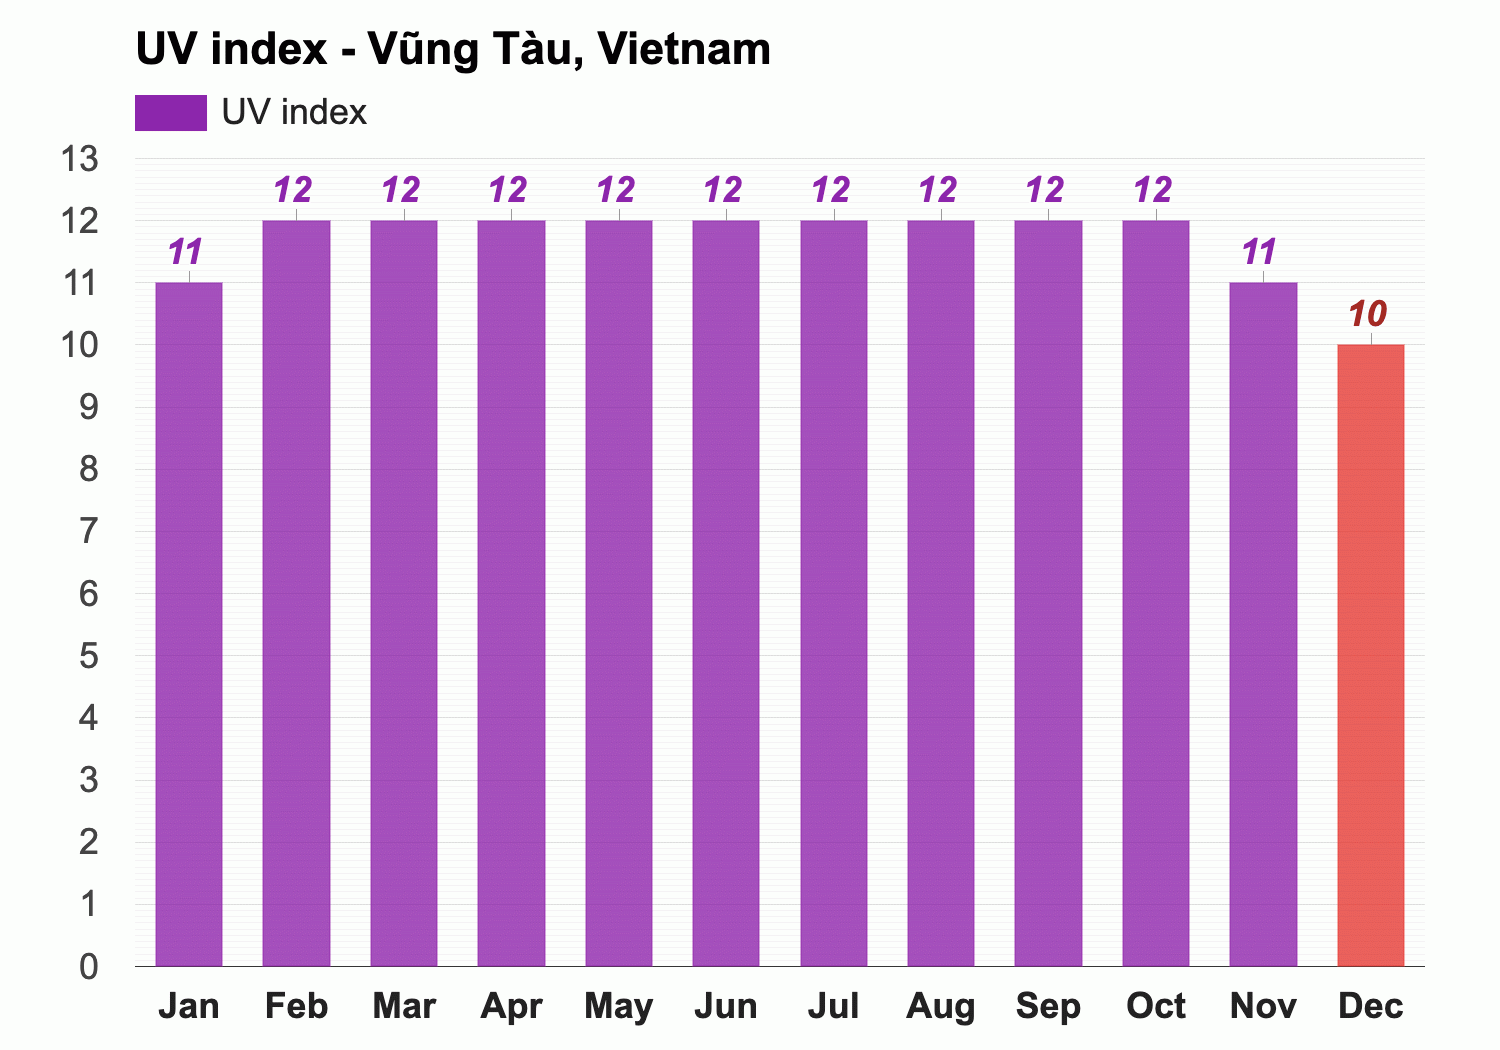 Vũng Tàu, Vietnam - March Weather forecast - Spring forecast